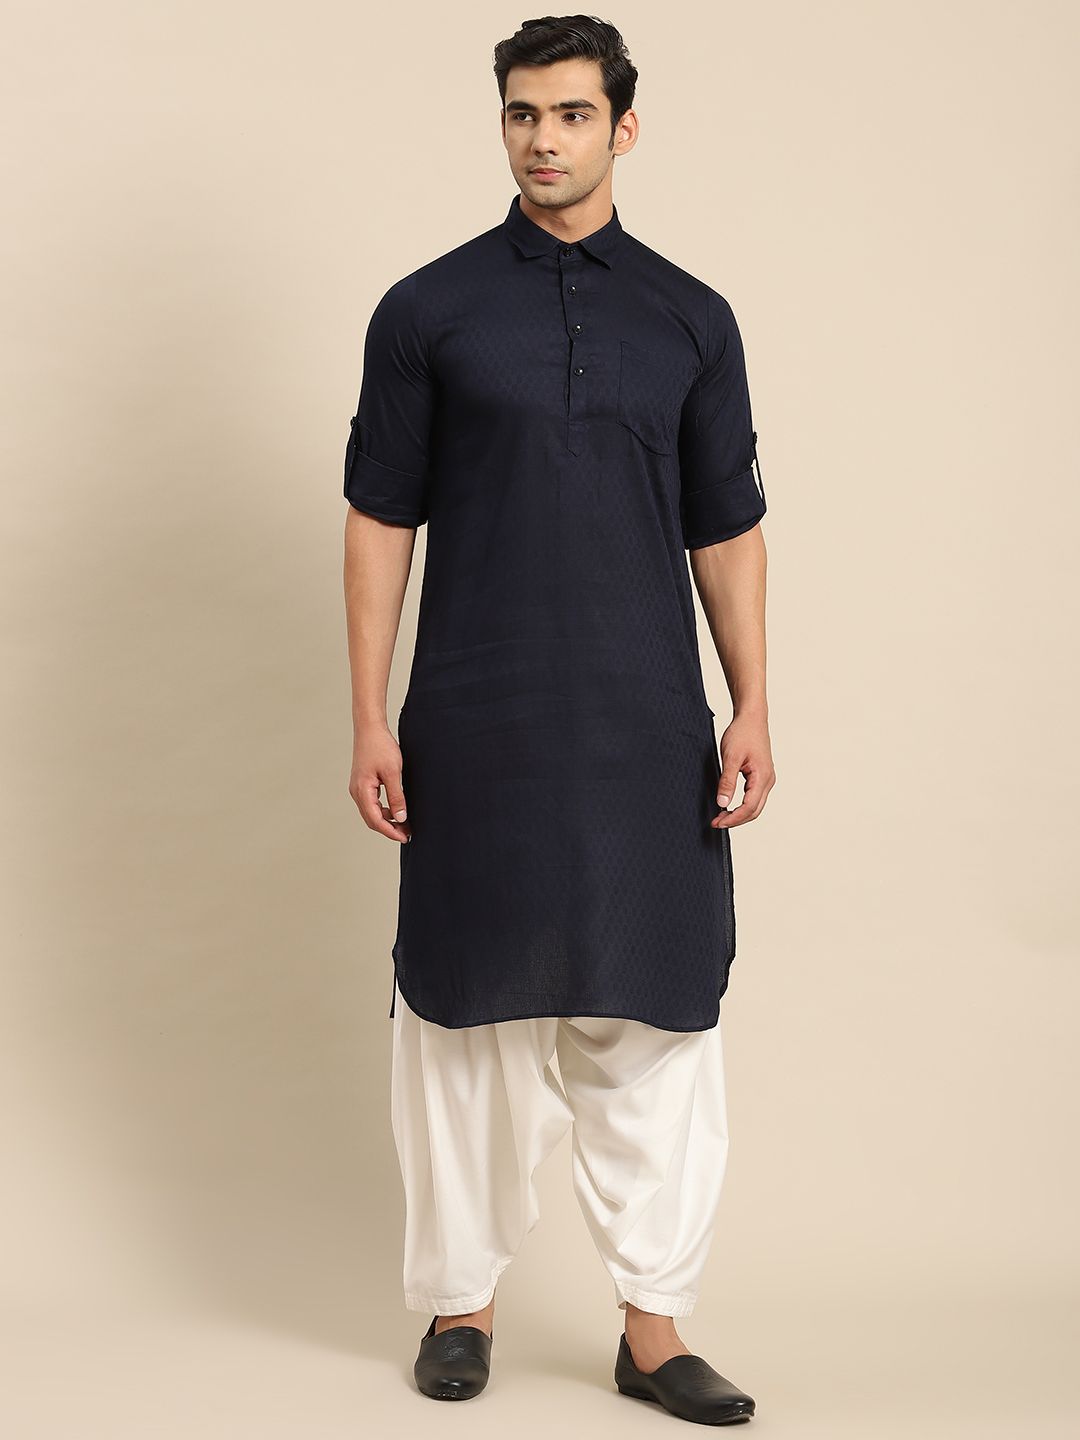 Navy Blue Shade Pathani Style Premium Cotton Kurta for Men Online SizeKurta  36 Color Navy